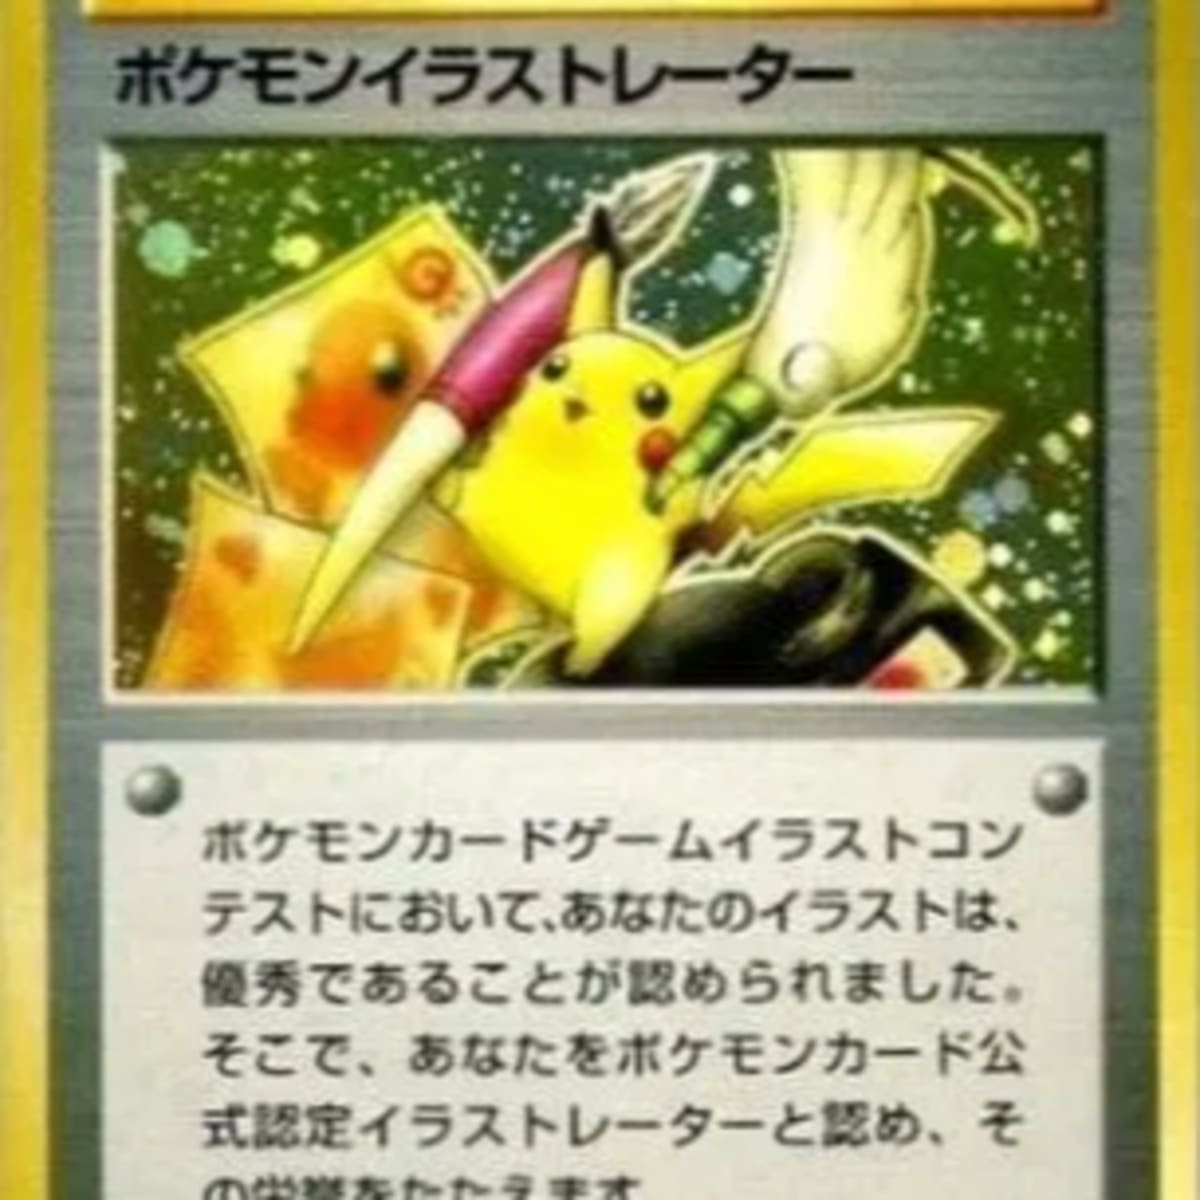 Rare Pokemon Card Sells For World Record Antique Trader Pikachu illustrator card extended art custom pokemon card. rare pokemon card sells for world